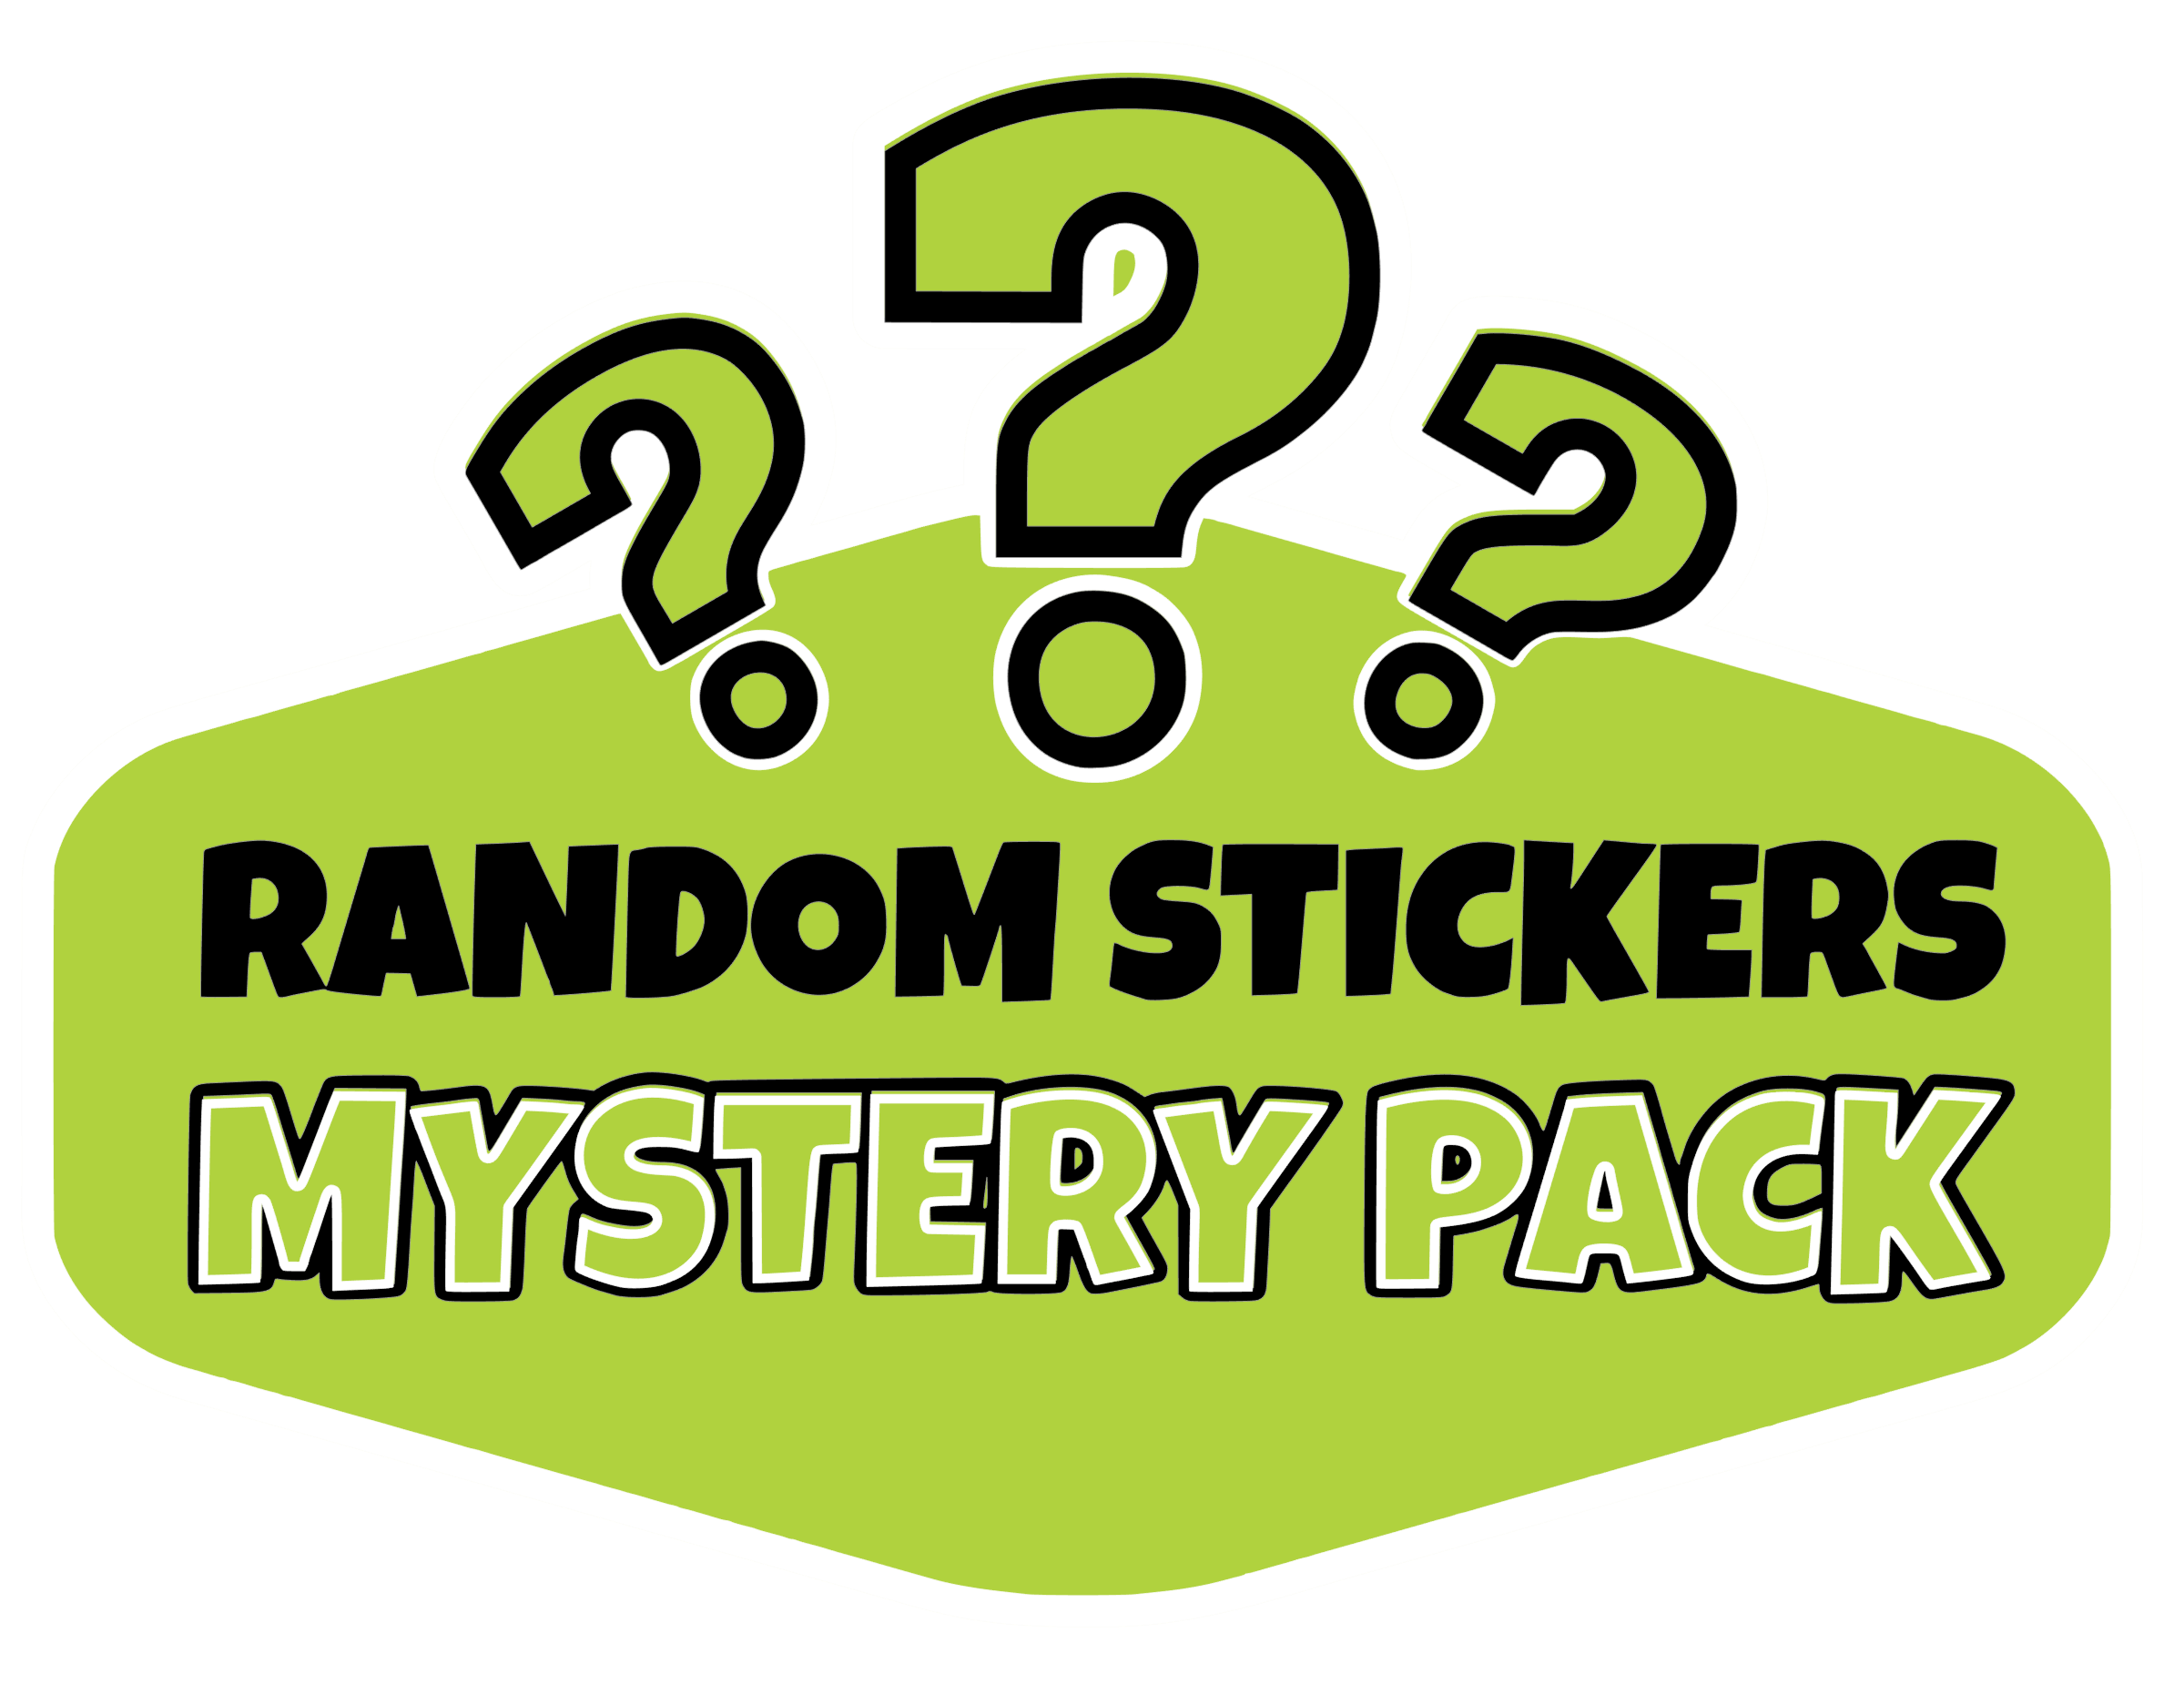 Random sticker pack Sticker for Sale by K80's Designs